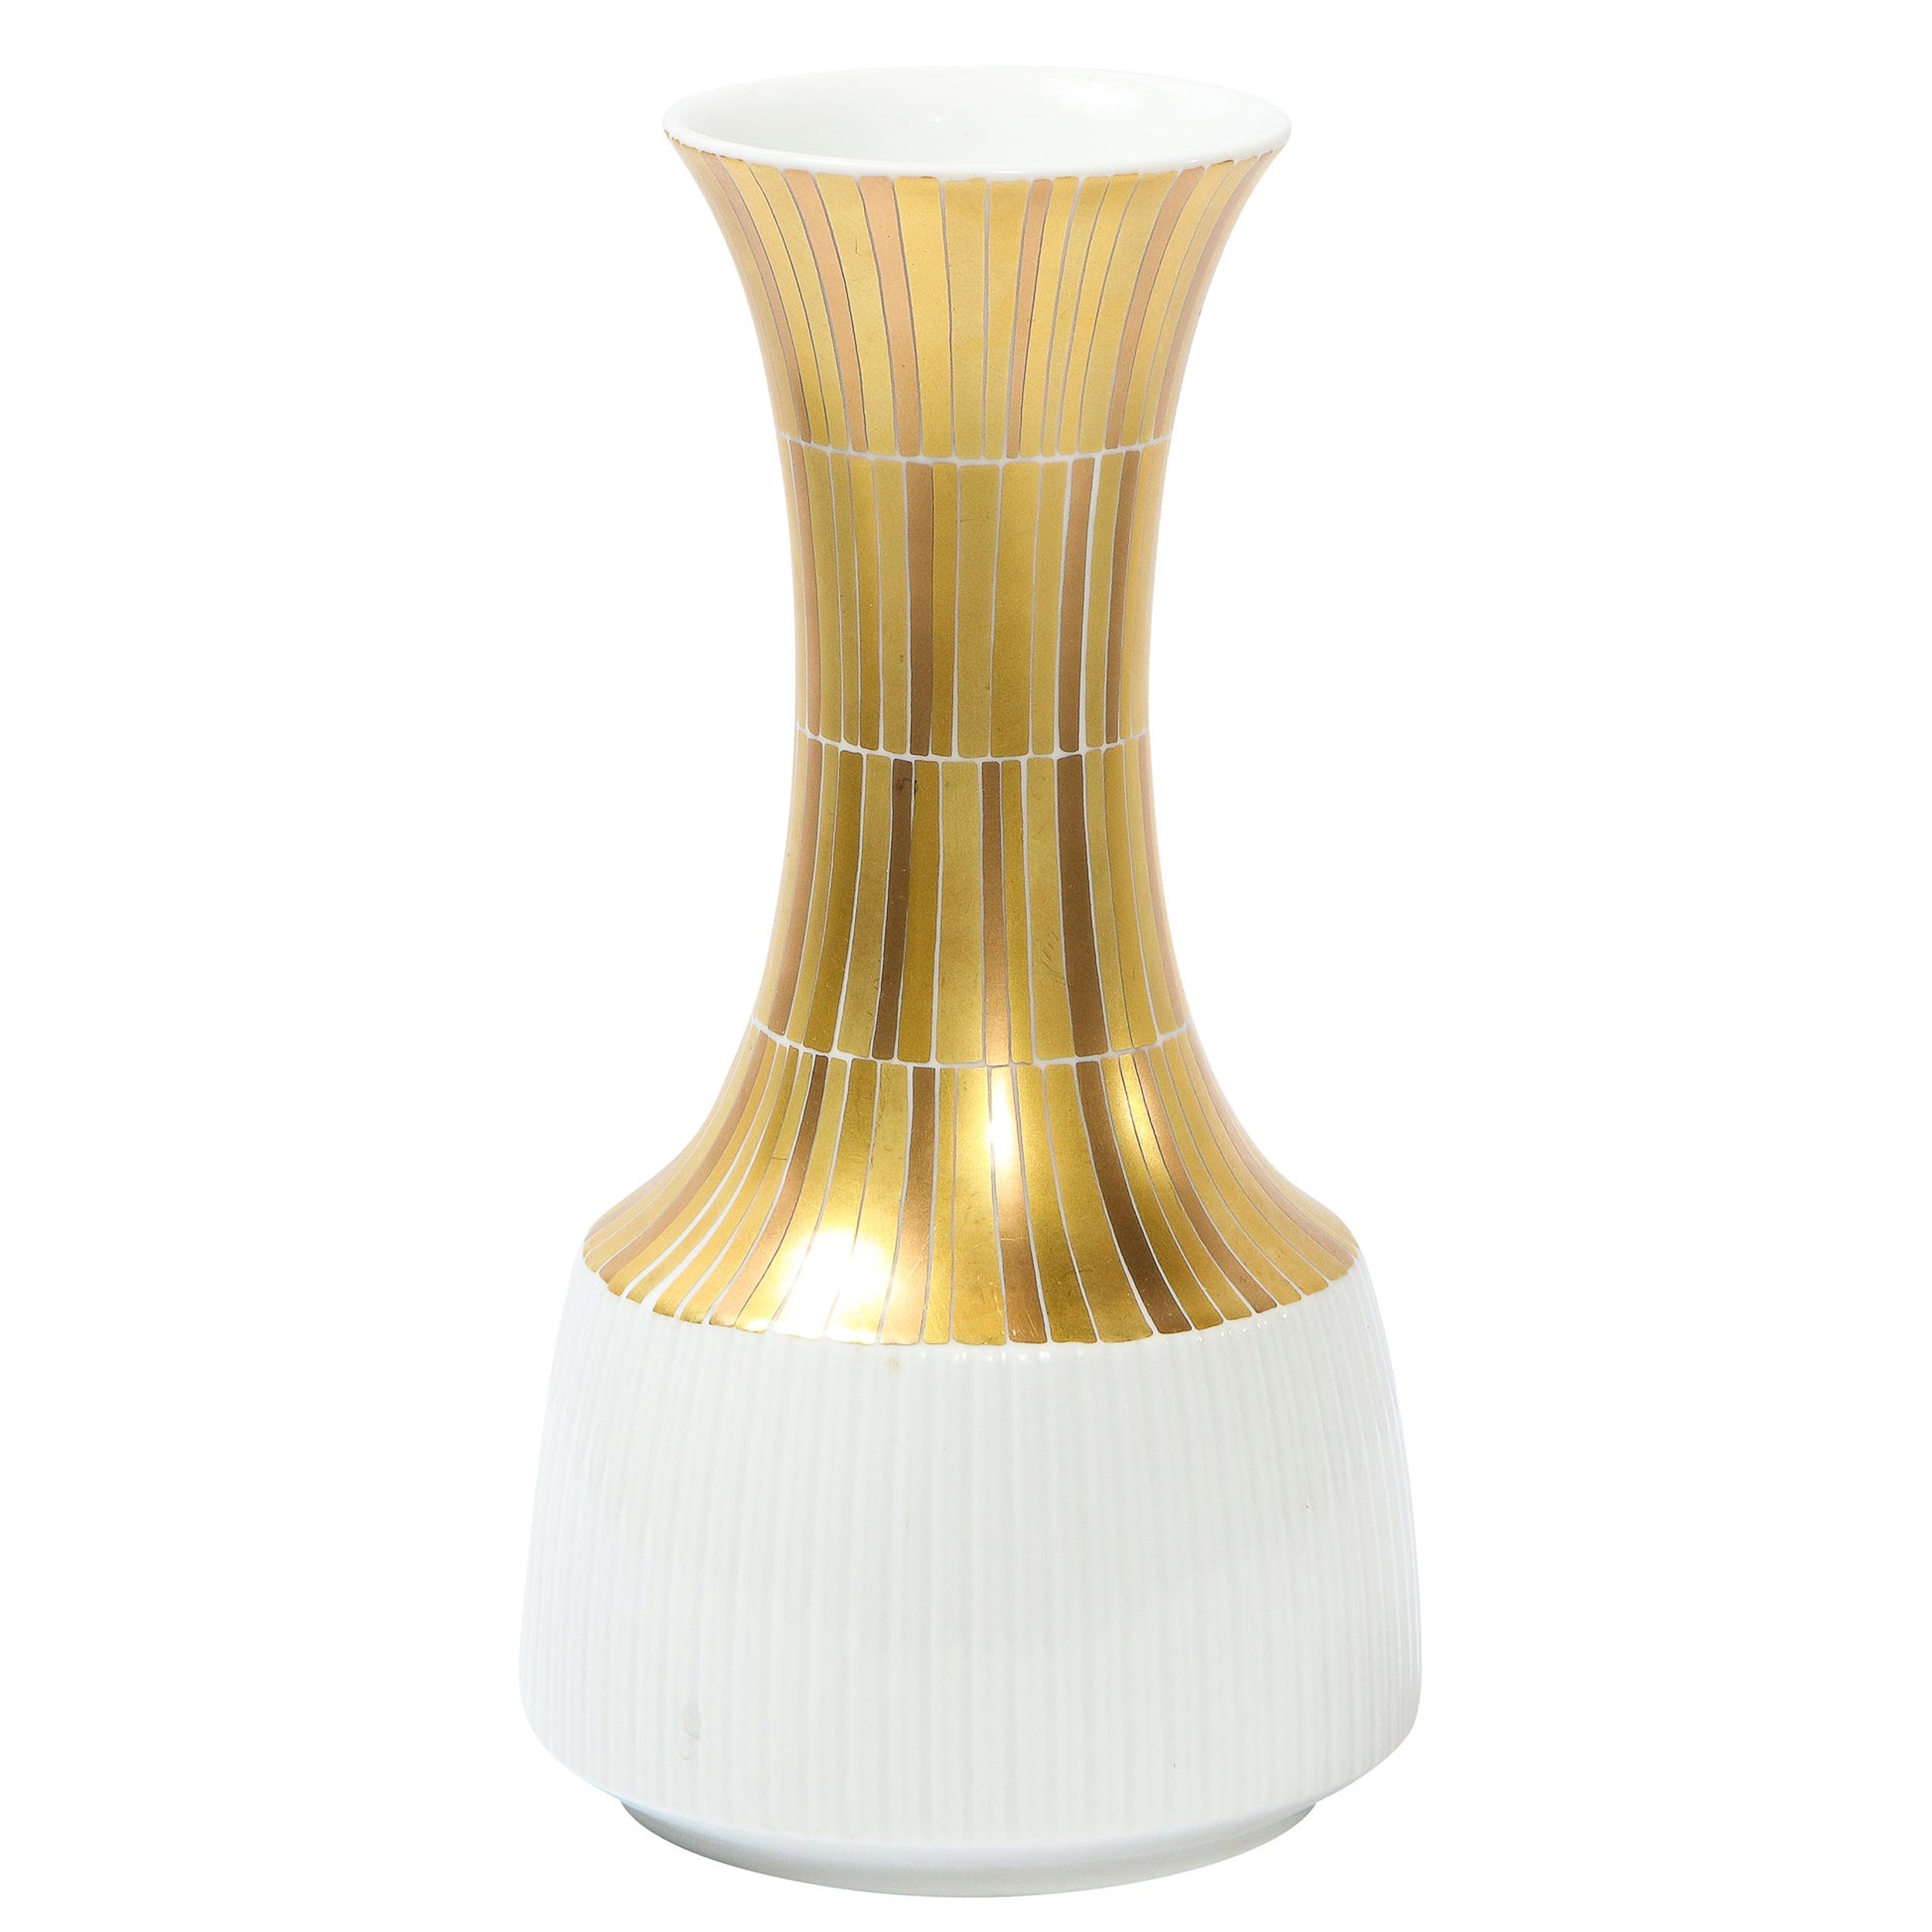 Signed Modernist Hourglass Form Porcelain Vase by Tapio Wirkkala for Rosenthal